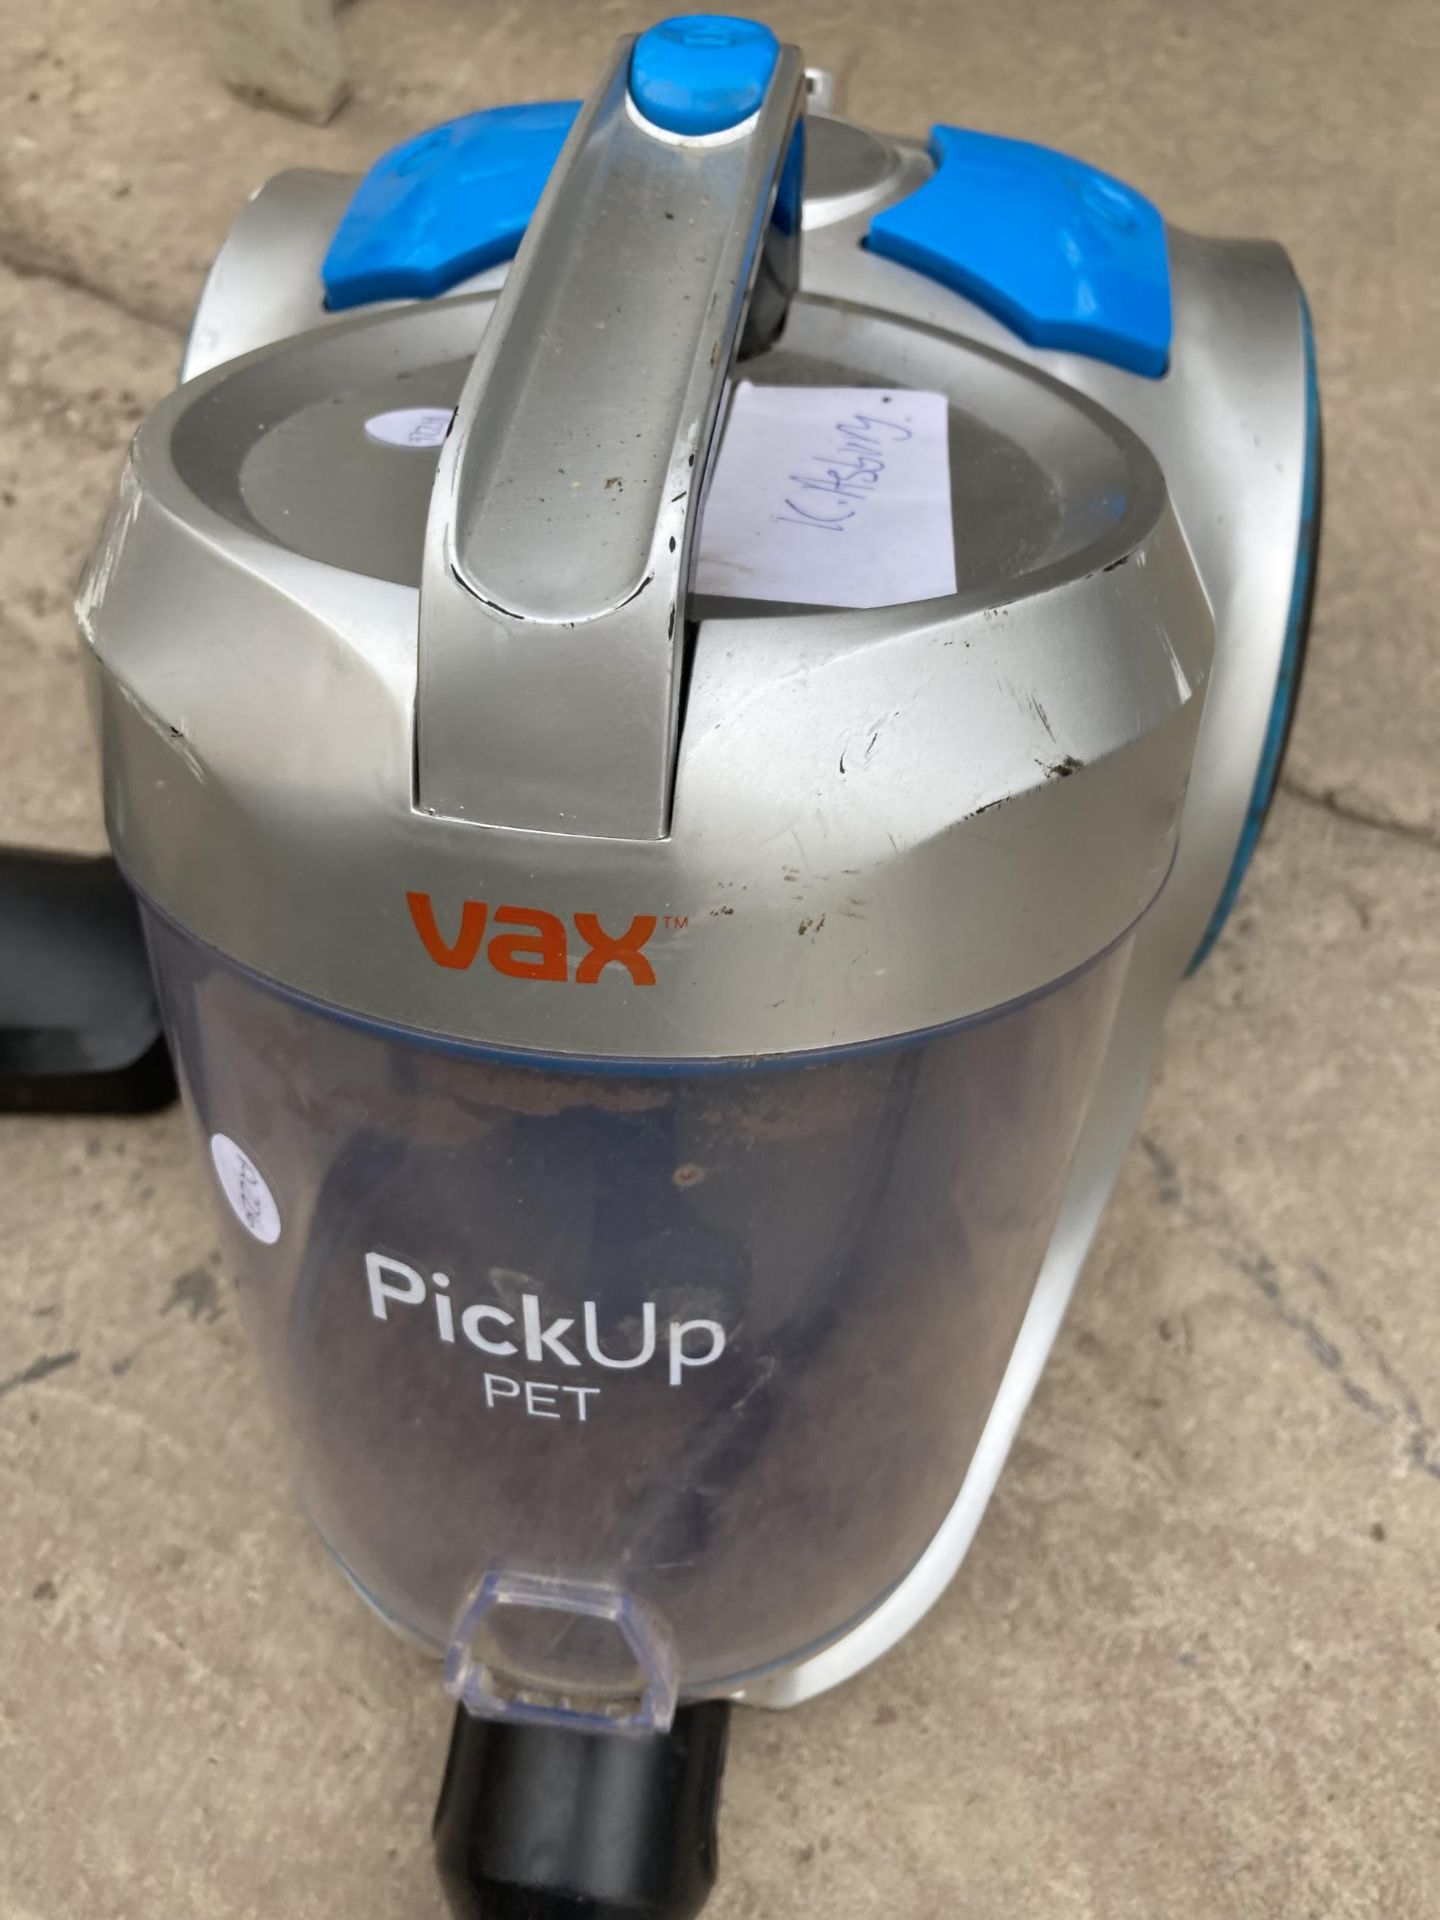 A VAX PICKUP PET VACUUM CLEANER - Image 3 of 3